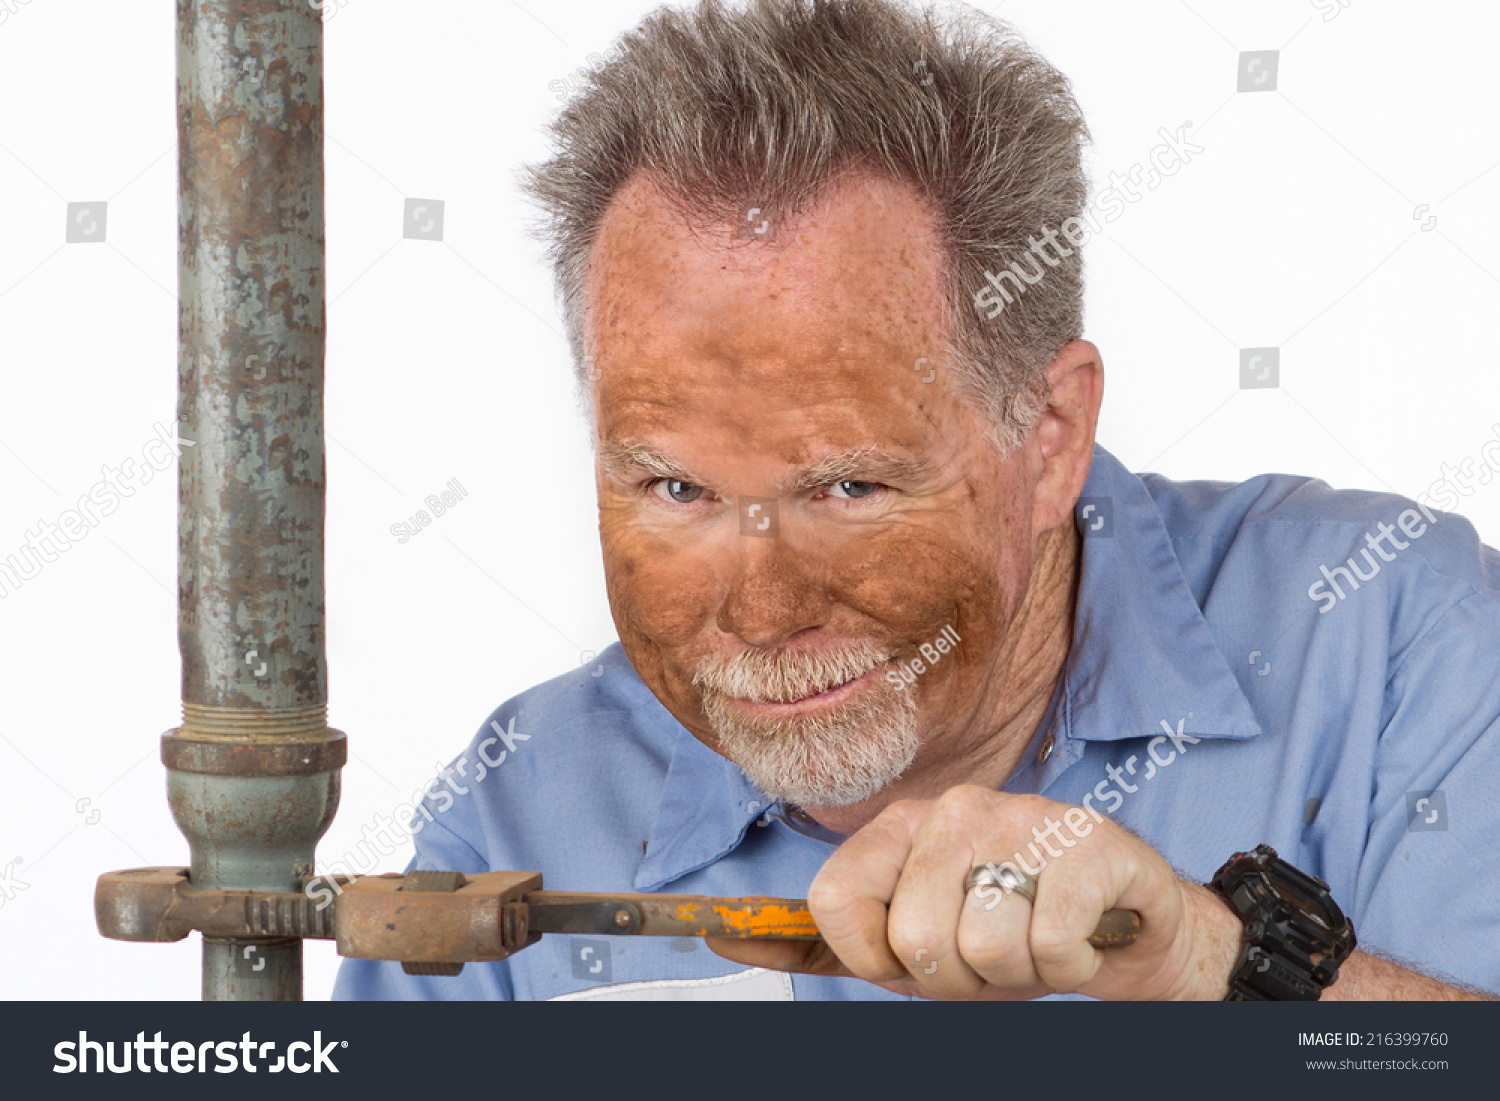 stock-photo-dirty-plumber-dirty-plumber-fixing-a-pipe-216399760.jpg